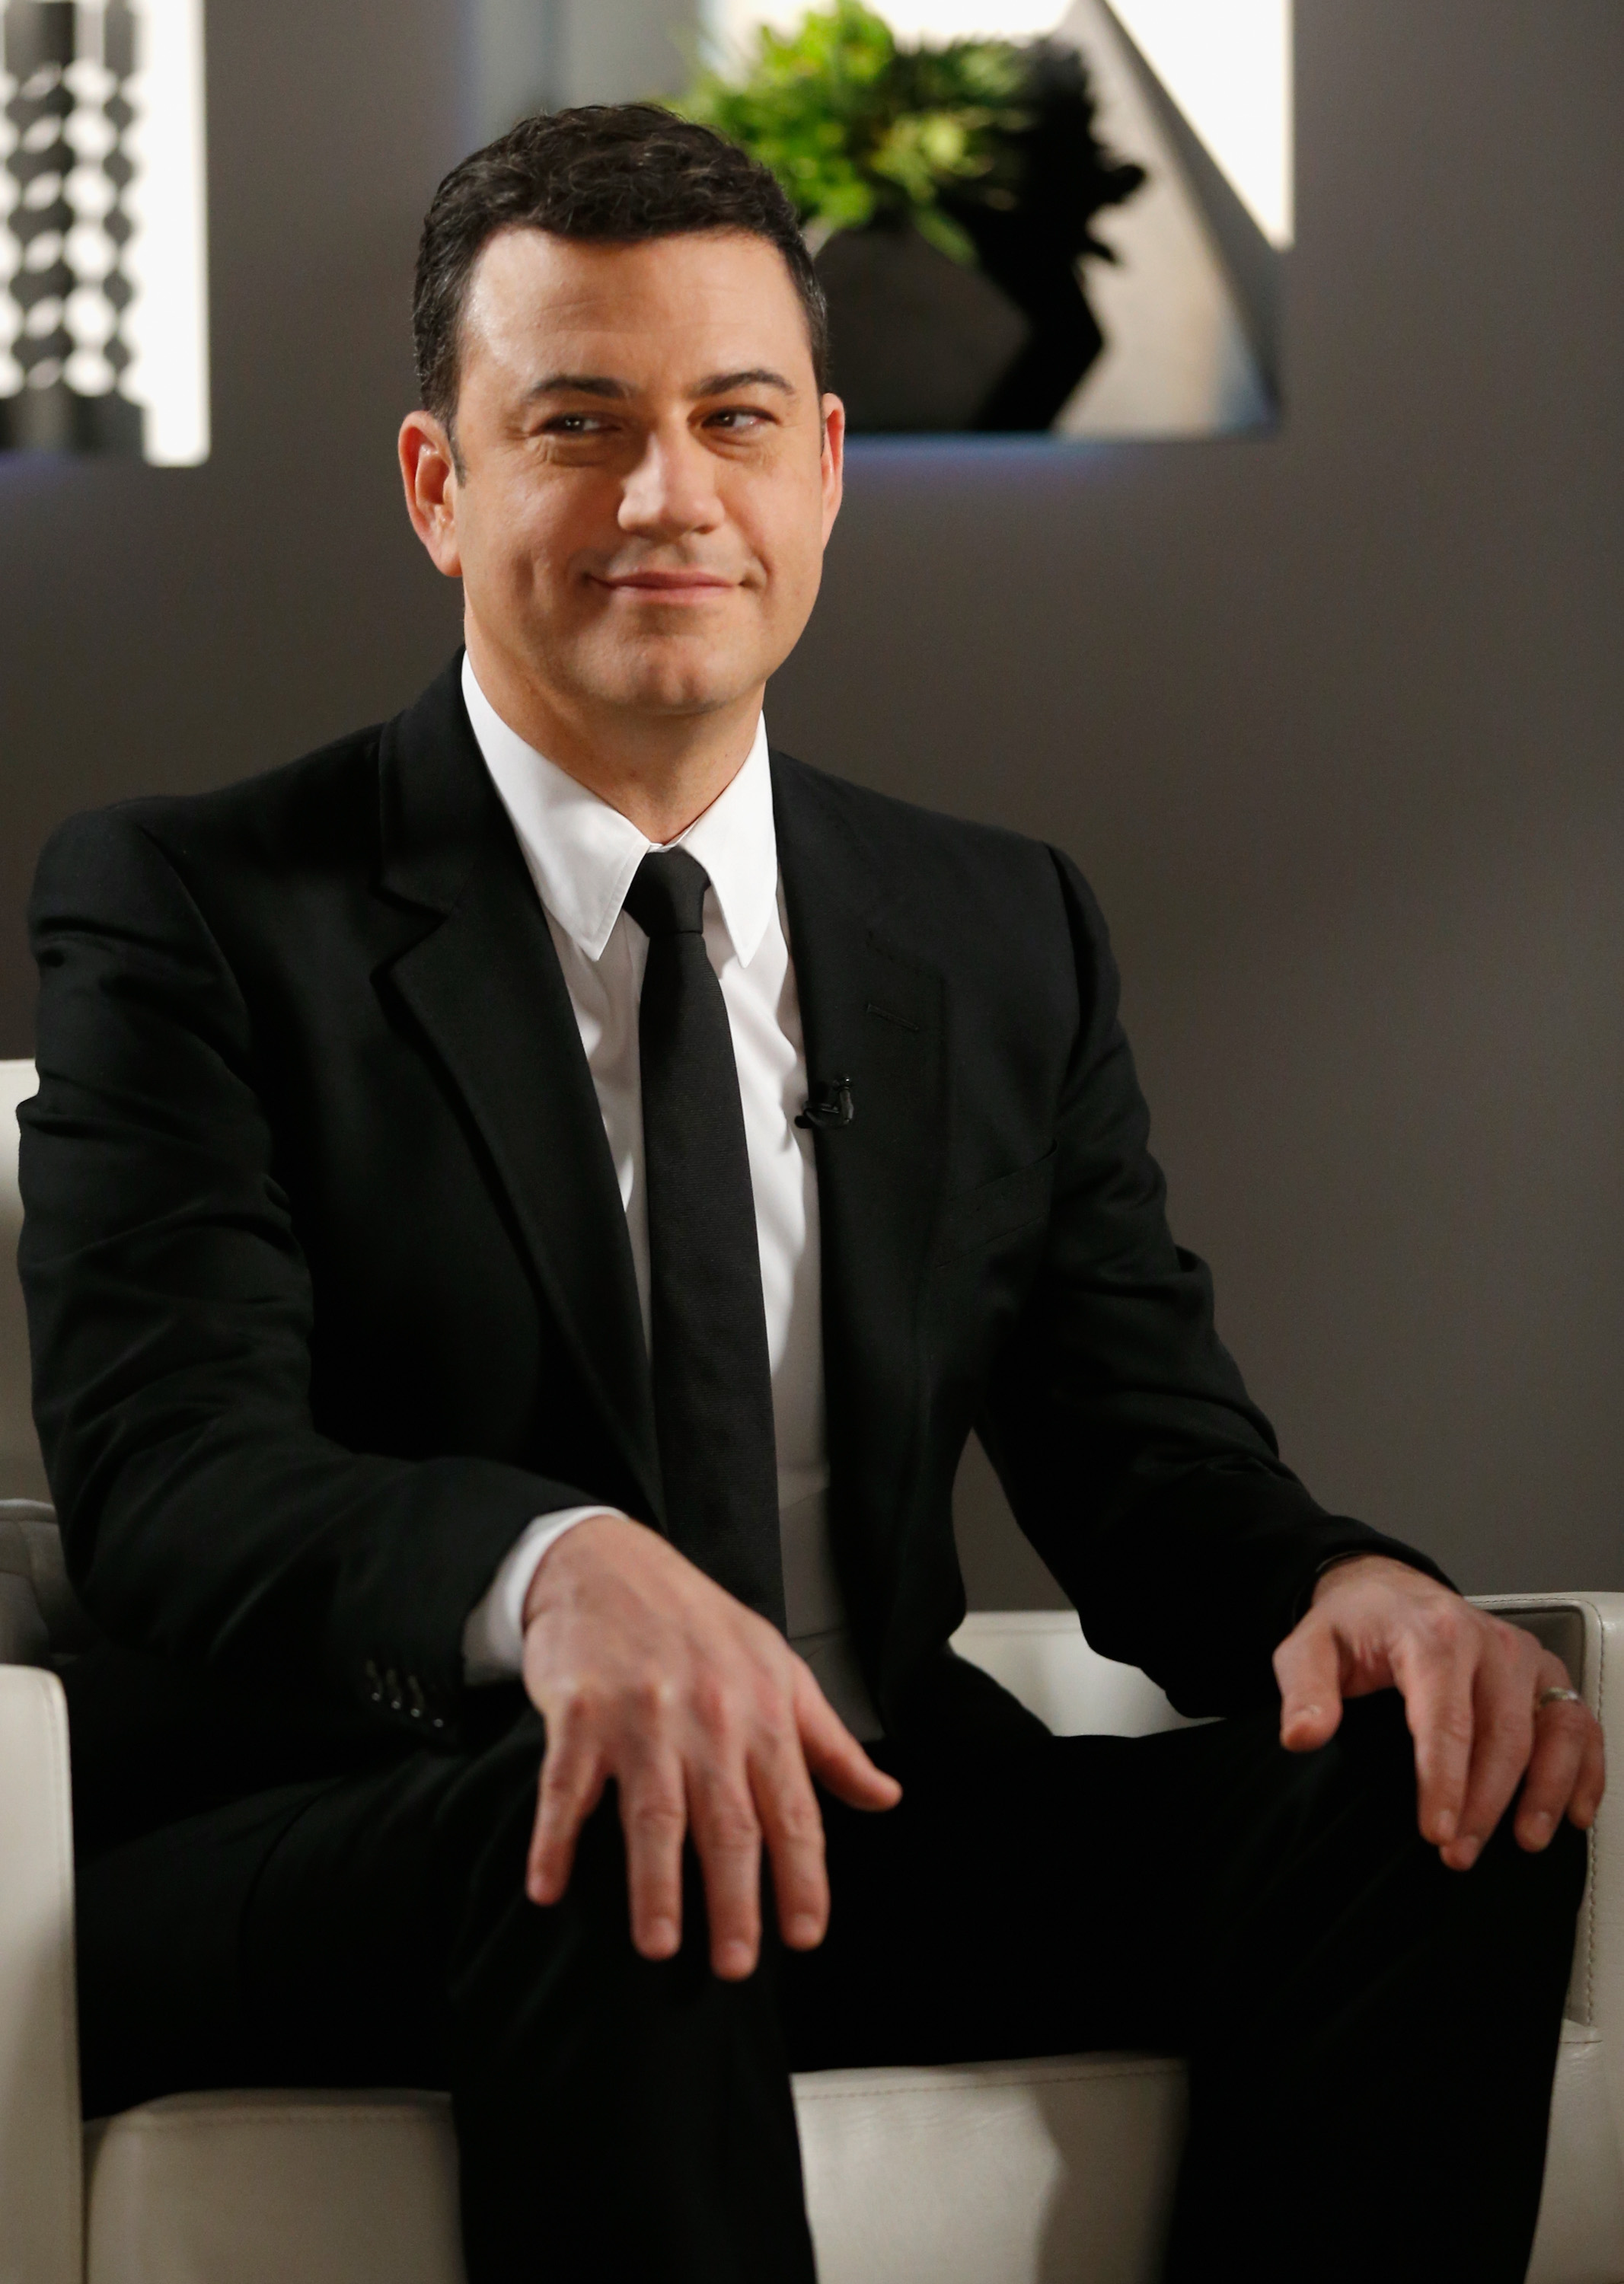 Jimmy Kimmel on March 29, 2015 in Los Angeles, California.